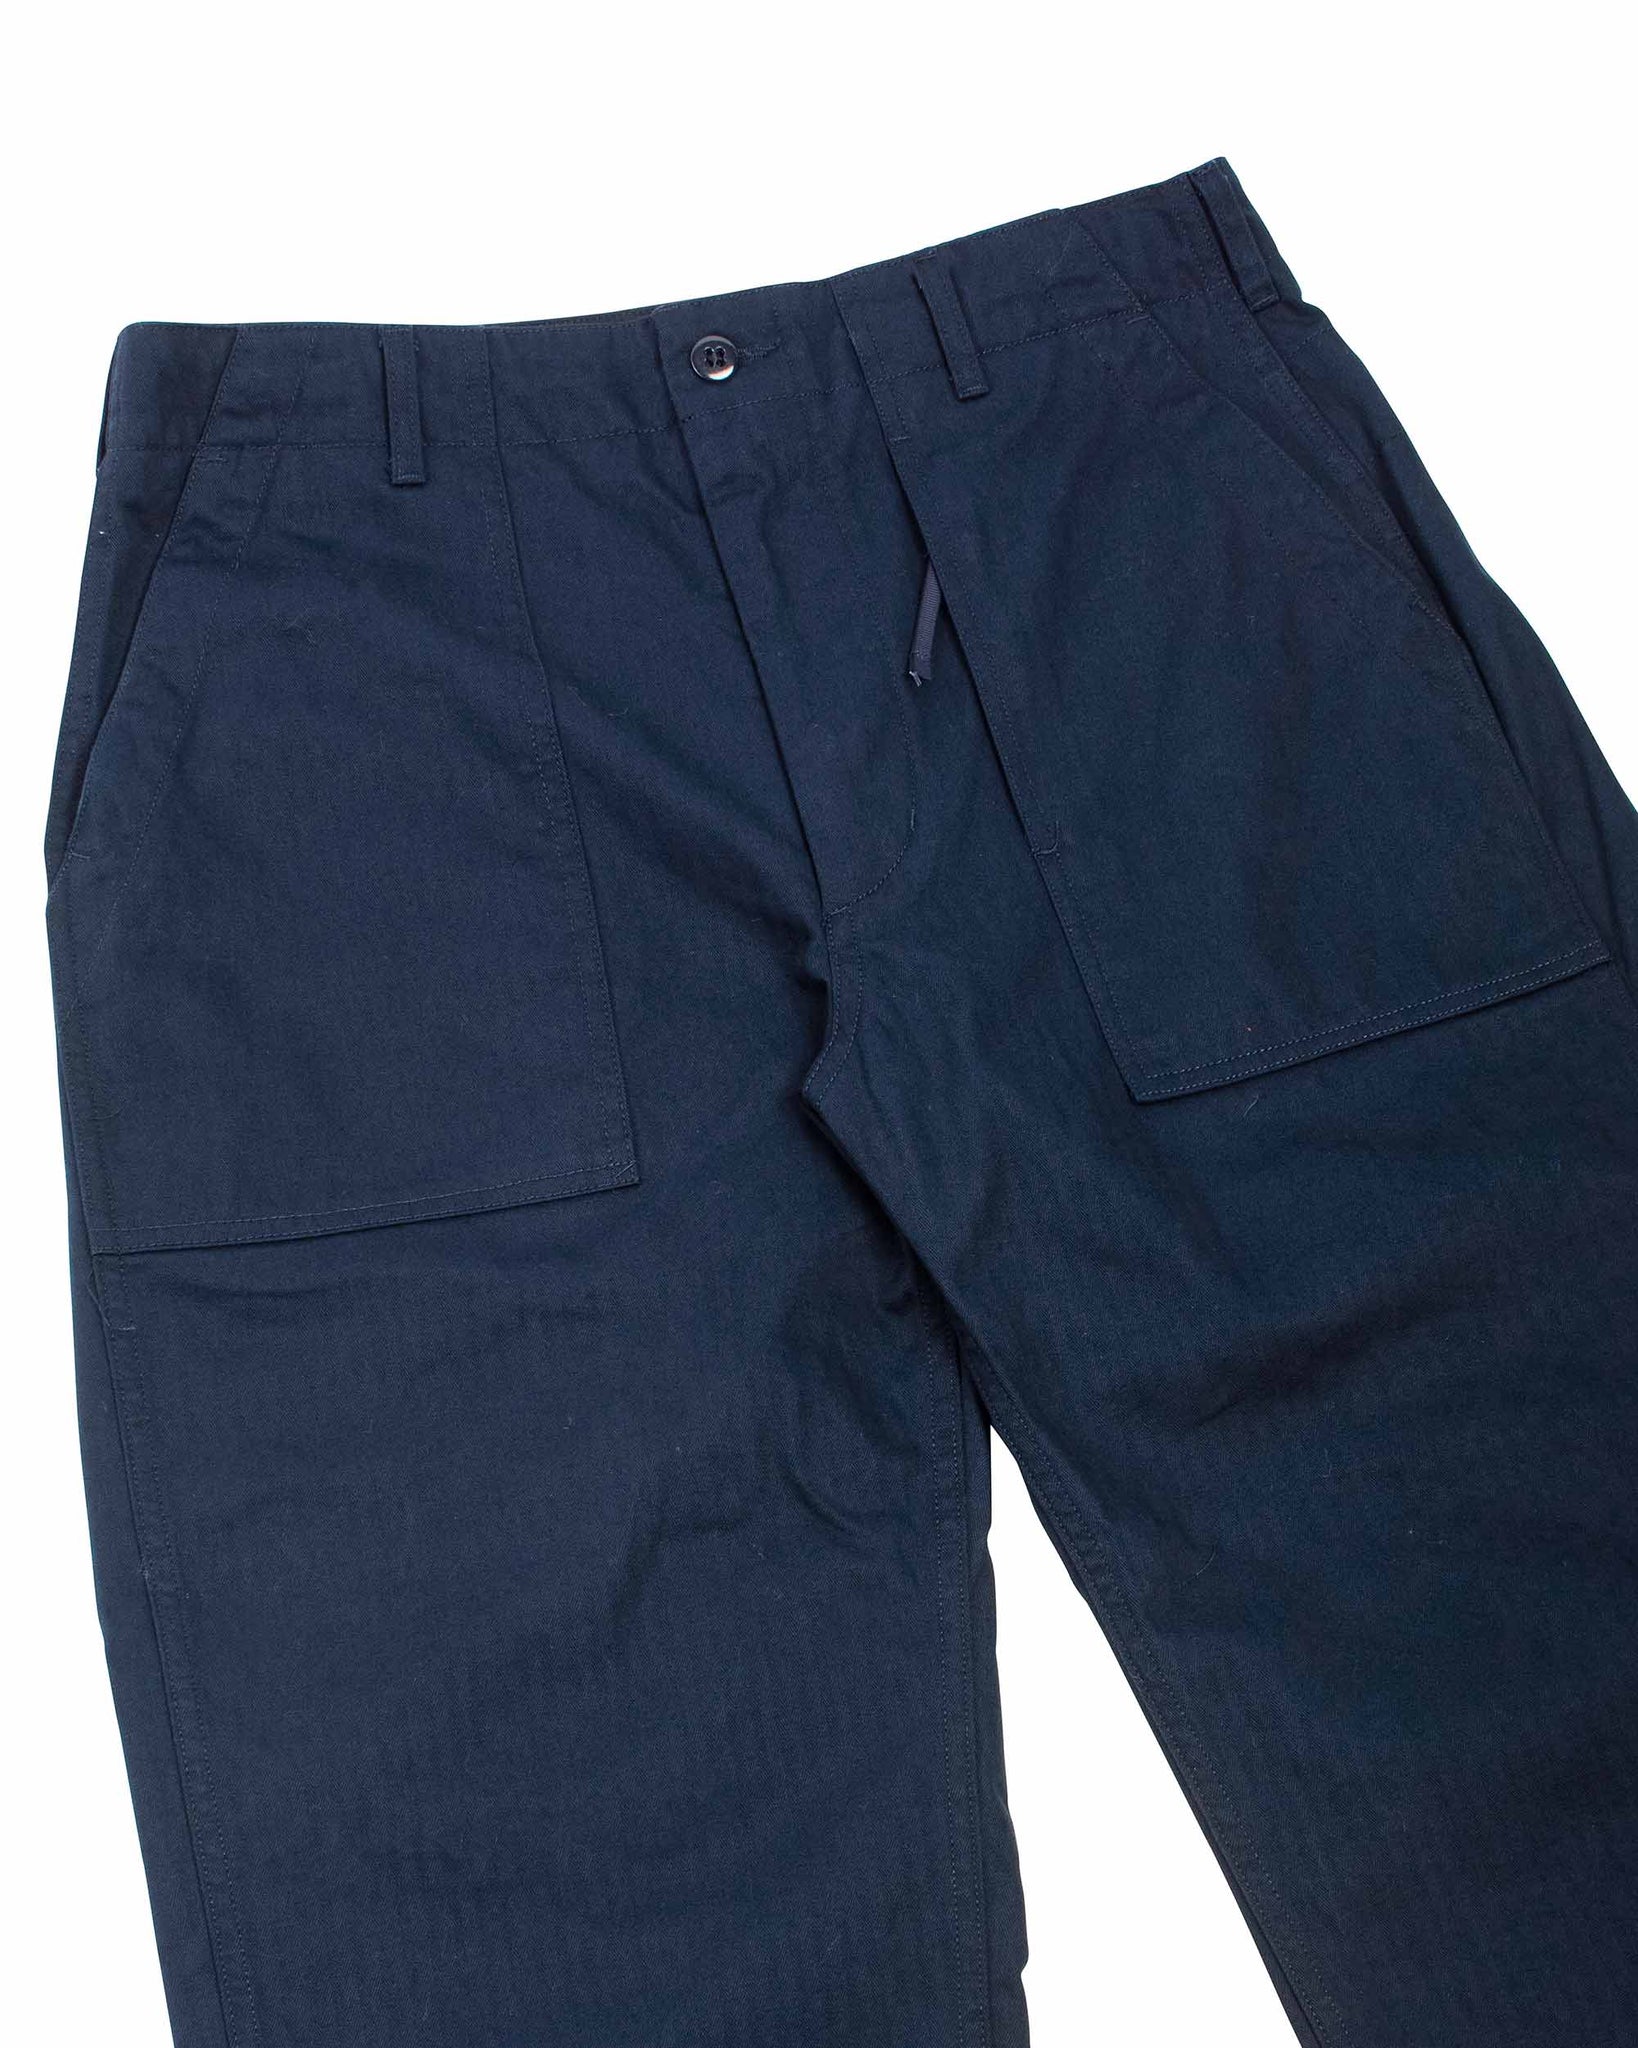 Engineered Garments Fatigue Pant Dark Navy Cotton Herringbone Twill Details